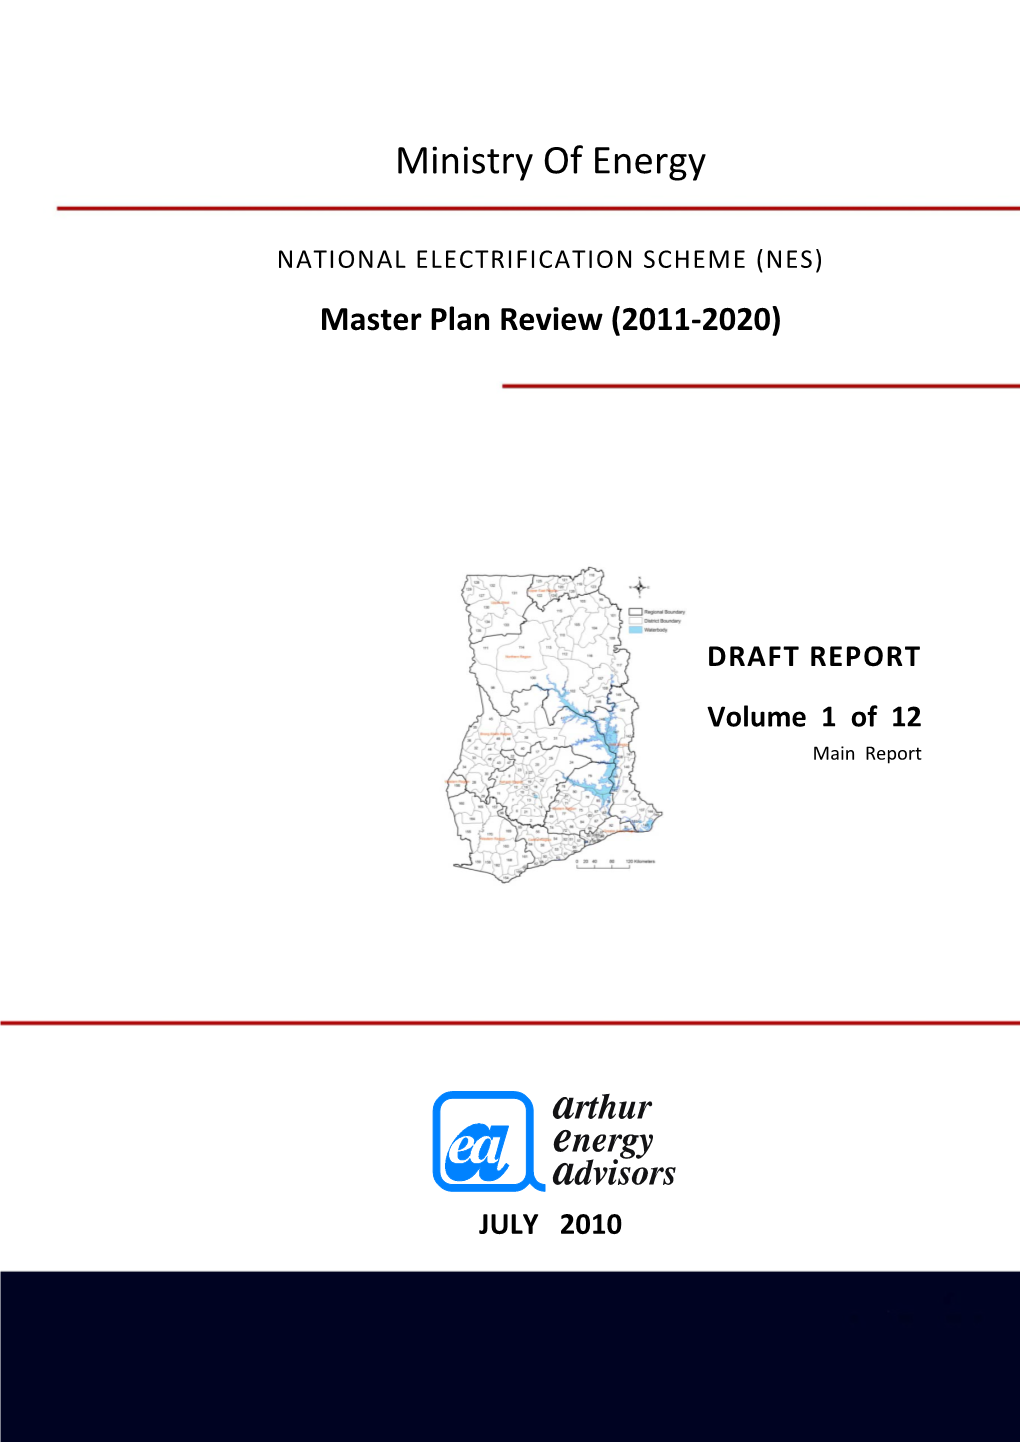 NATIONAL ELECTRIFICATION SCHEME (NES) Master Plan Review (2011-2020)